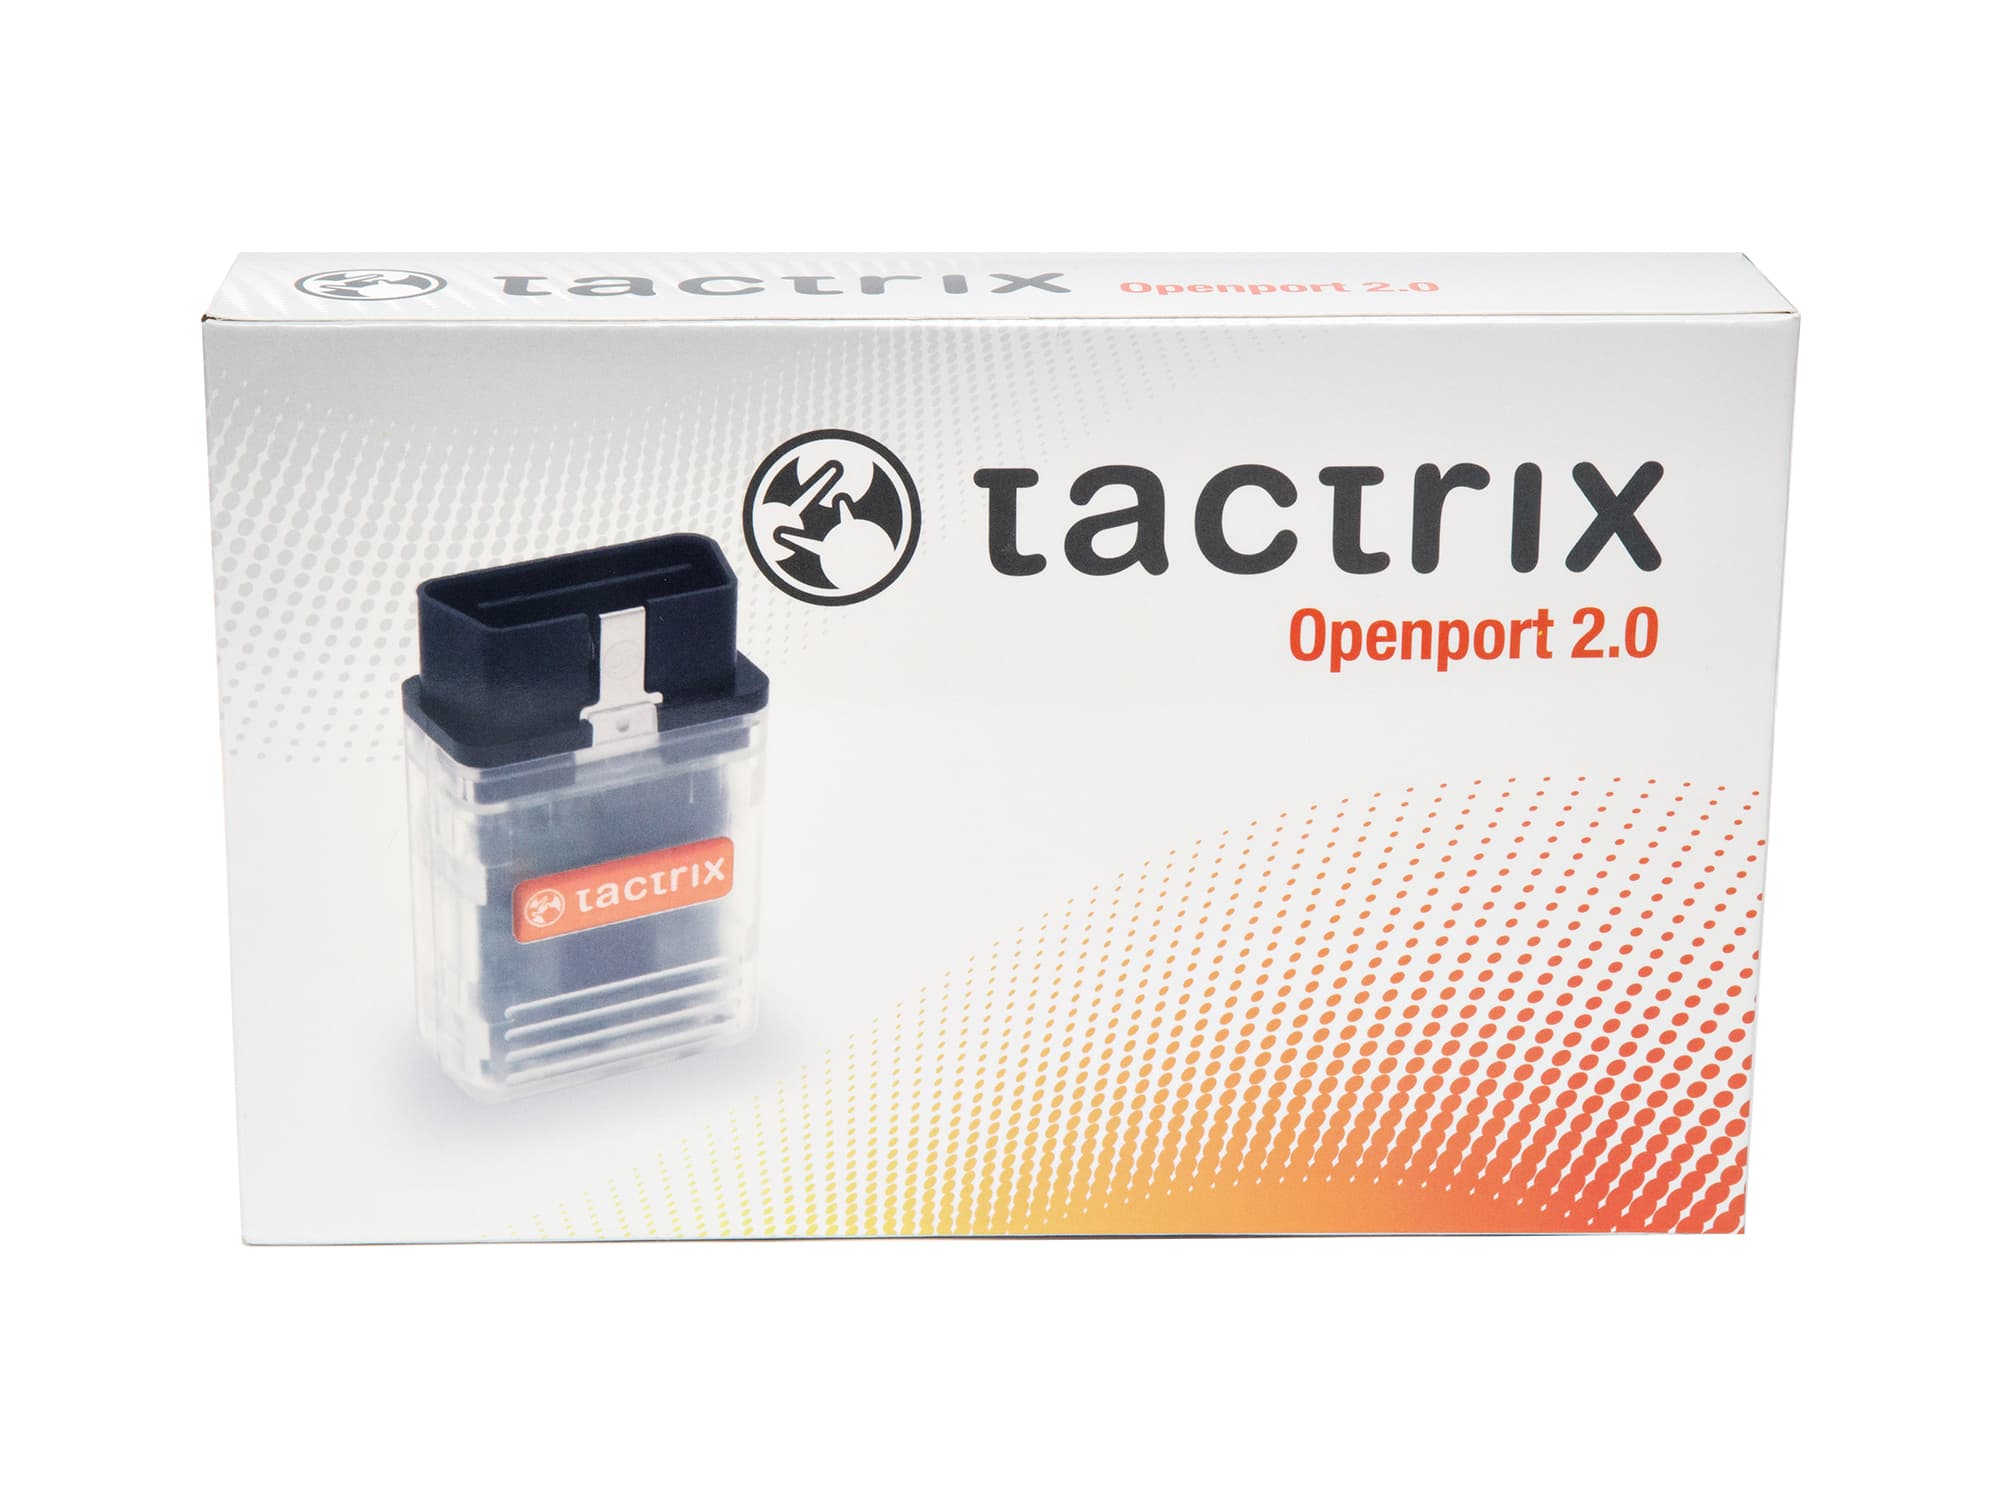 Tactrix Openport 2.0 evo x adapter